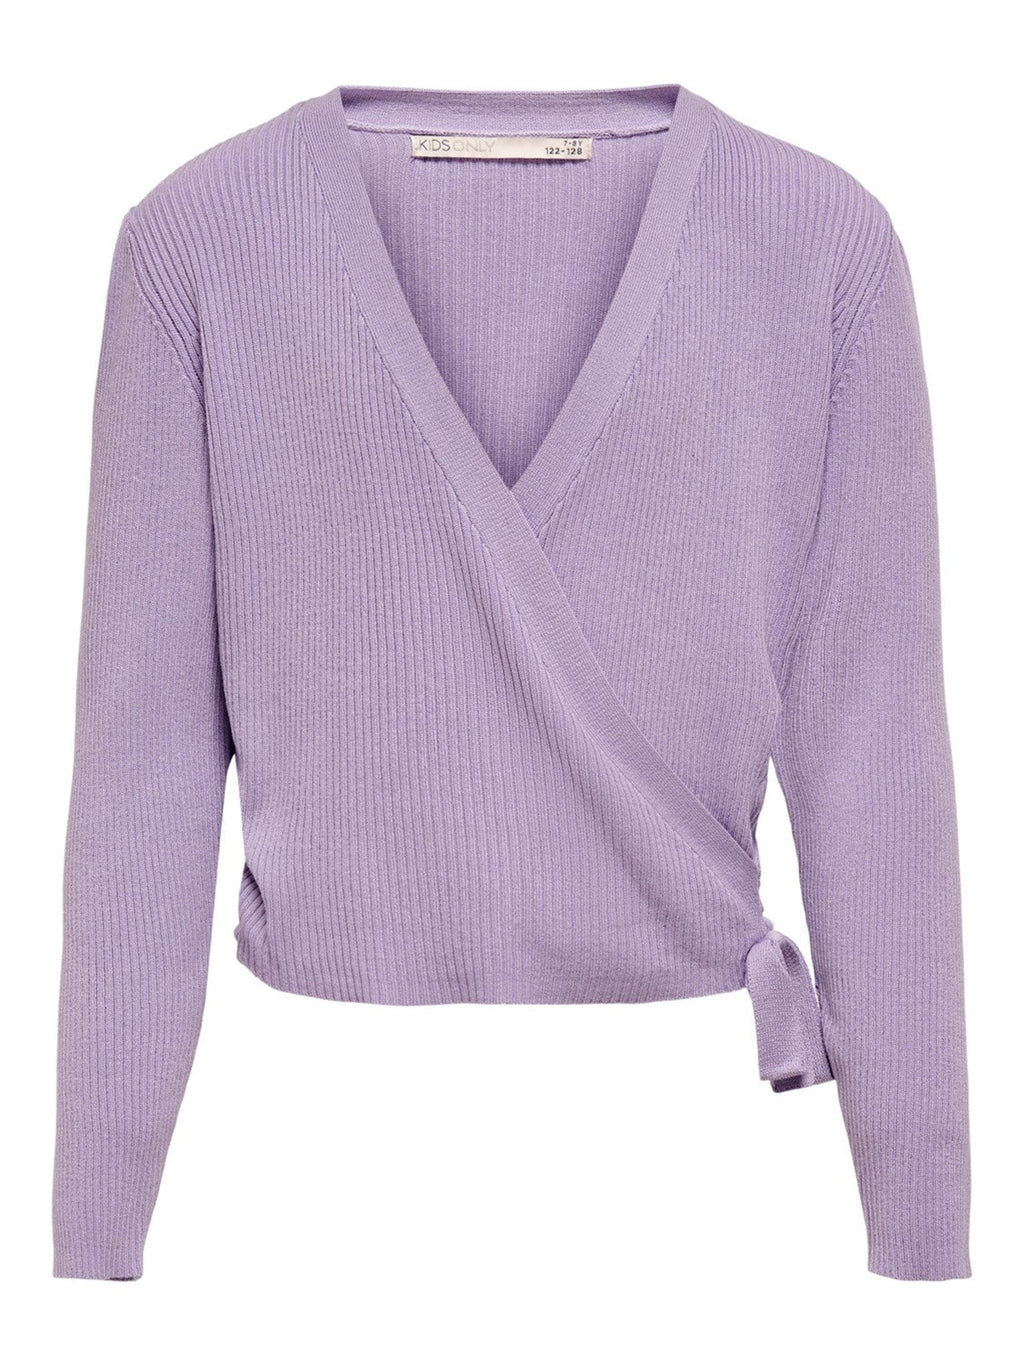 Jolie wrap sweater - lavendel